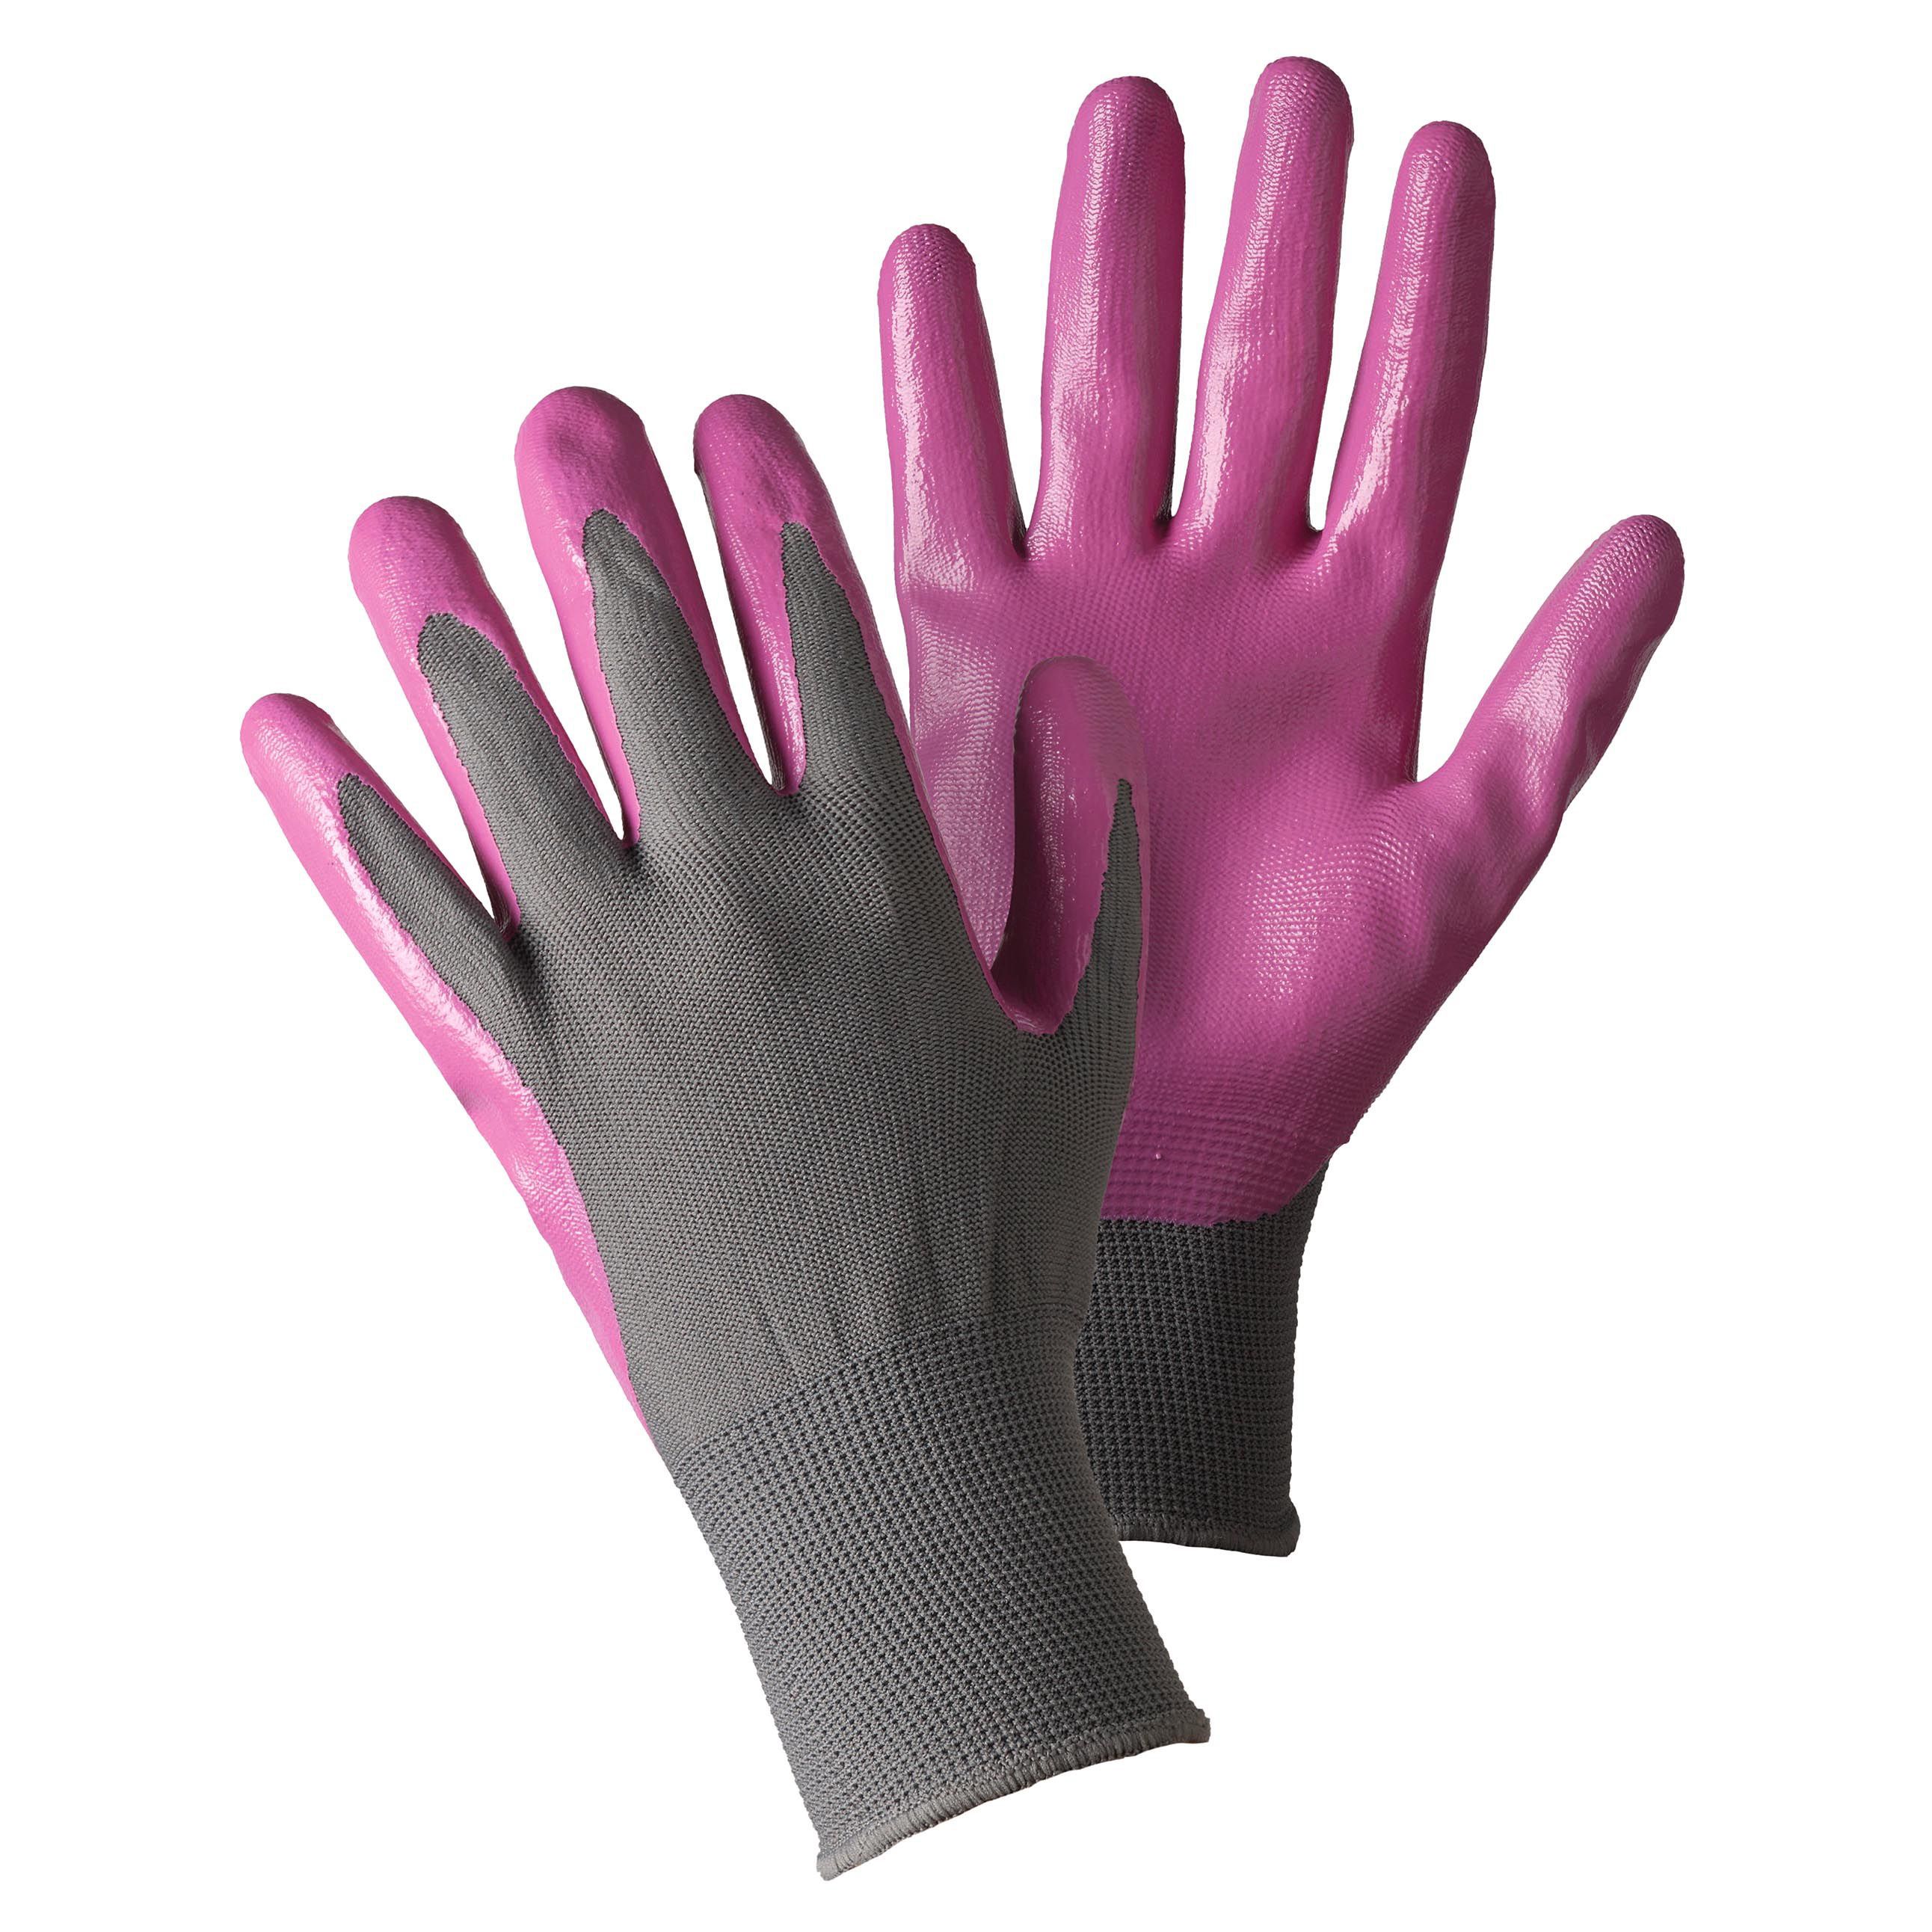 Briers Polyester (PES) Gardening gloves, Medium